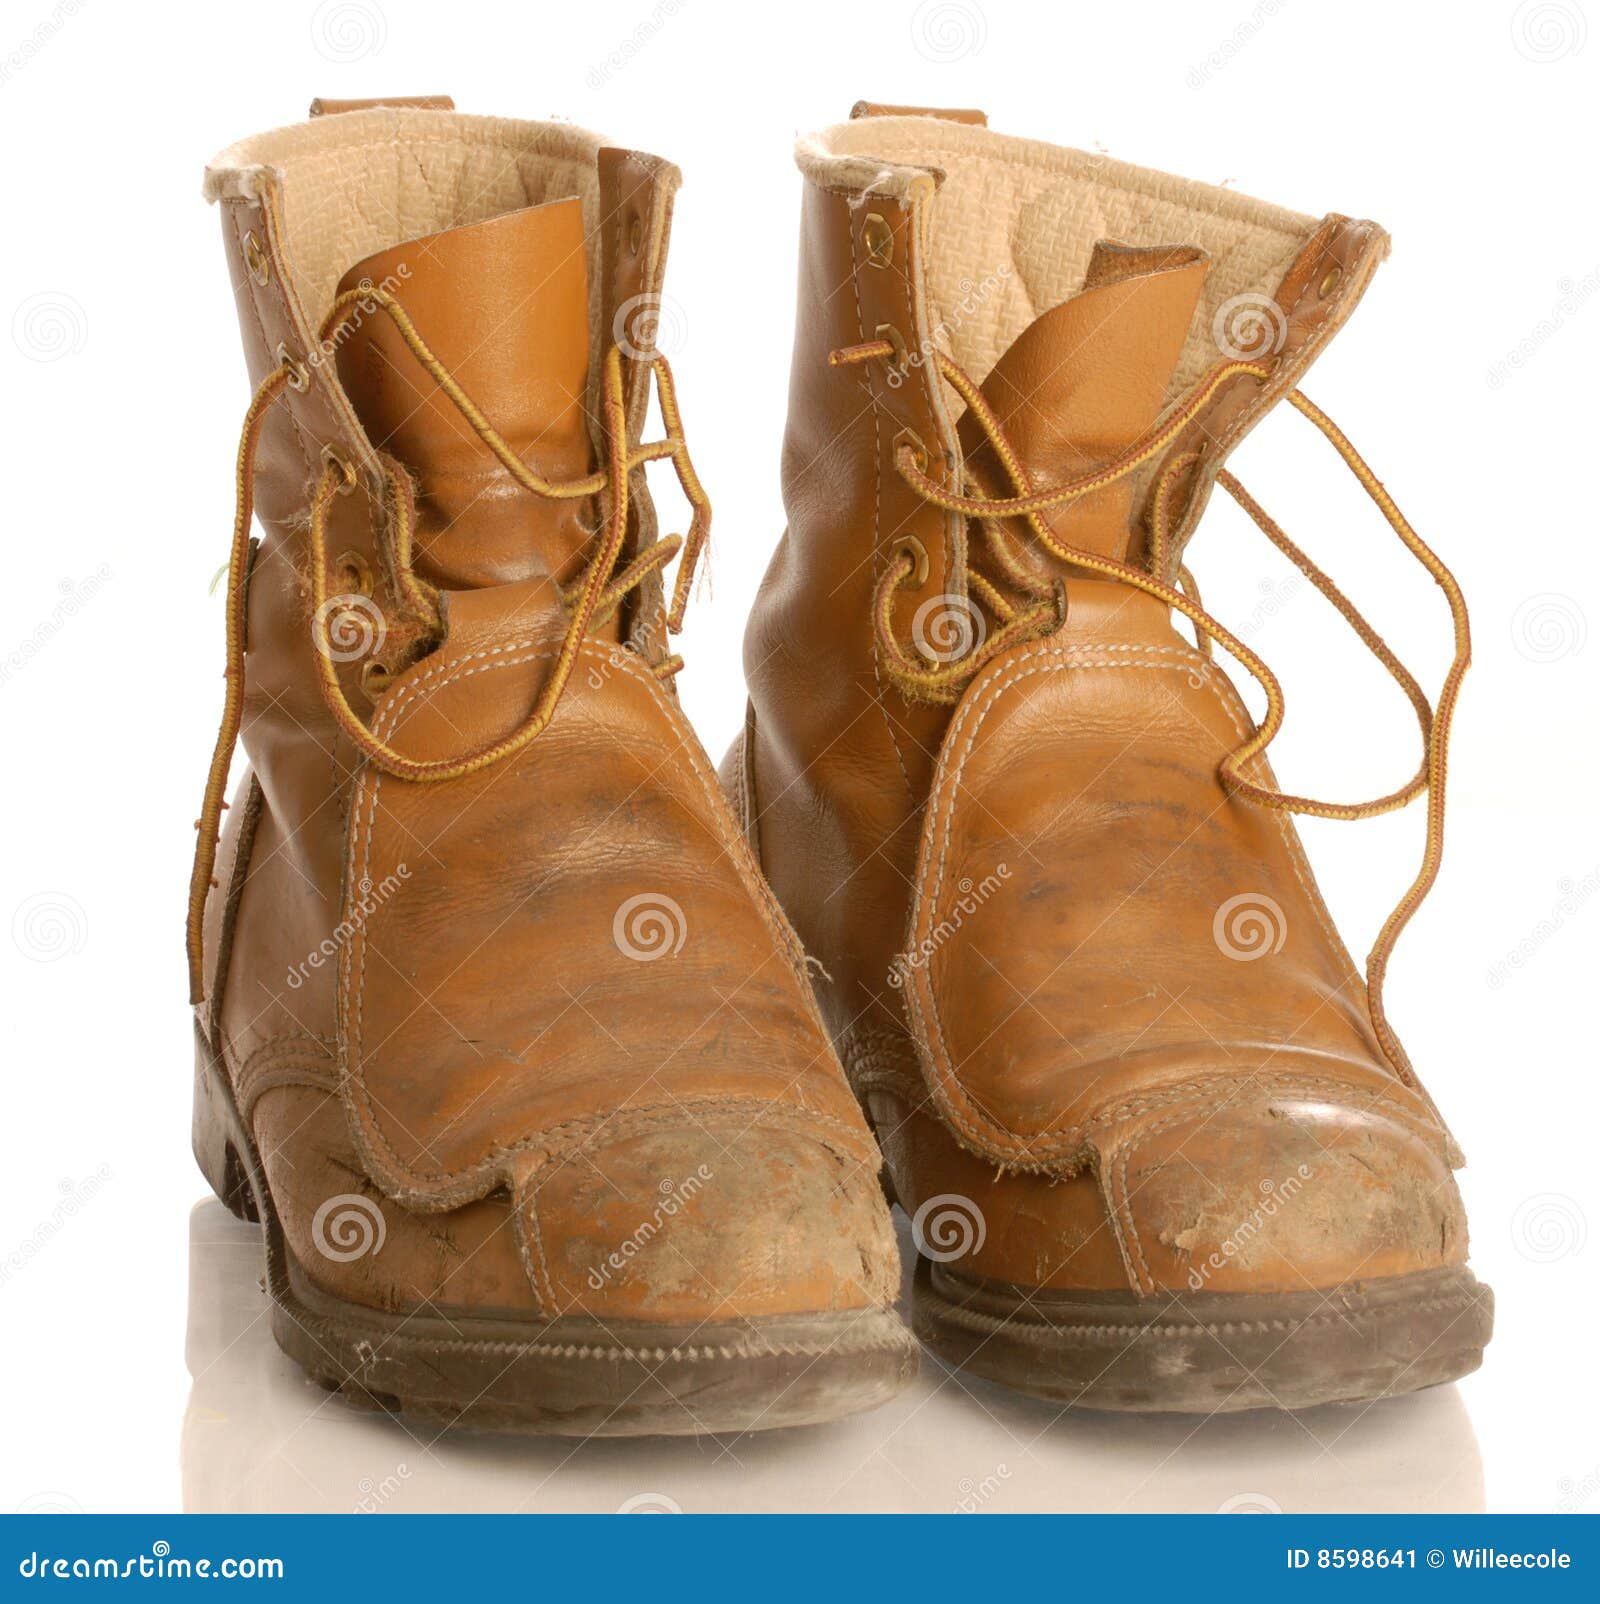 Worn work boots stock image. Image of splatters, brown - 8598641